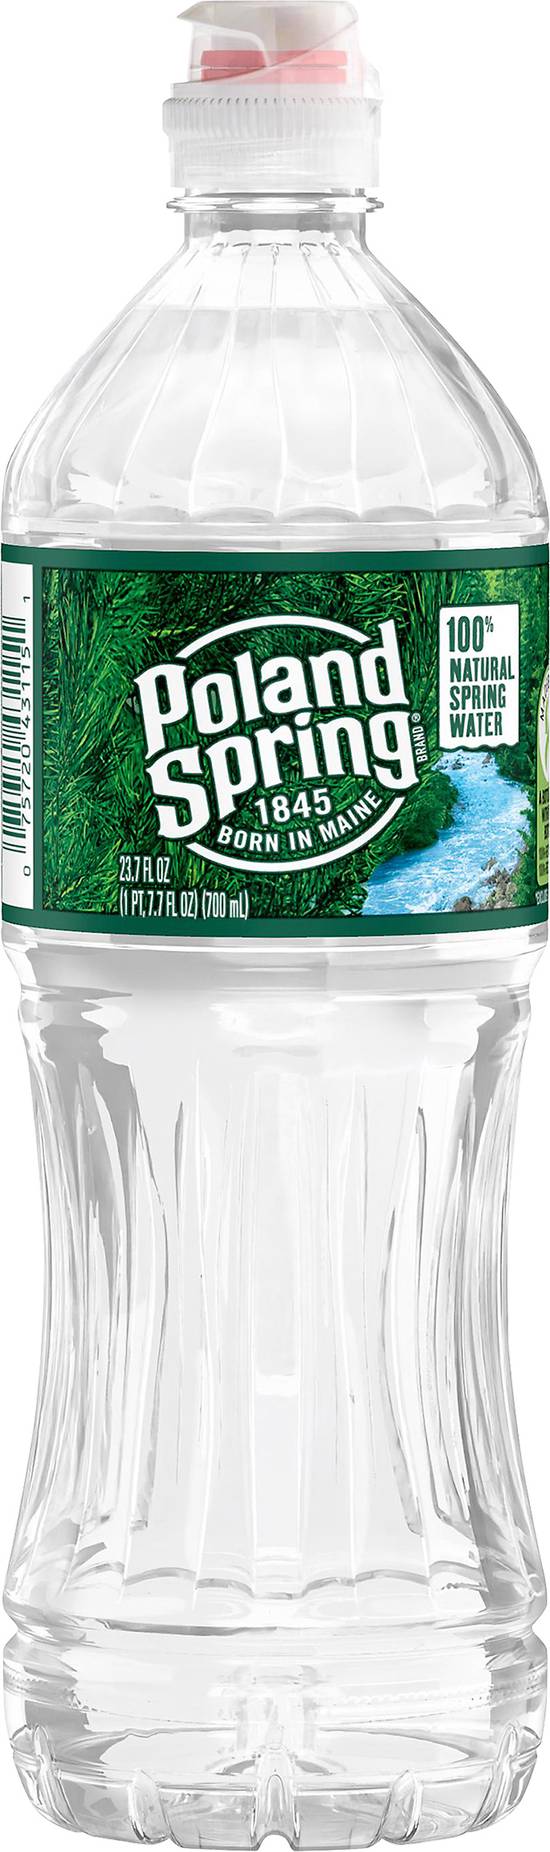 Poland Spring 100% Natural Spring Water (23.7 fl oz)